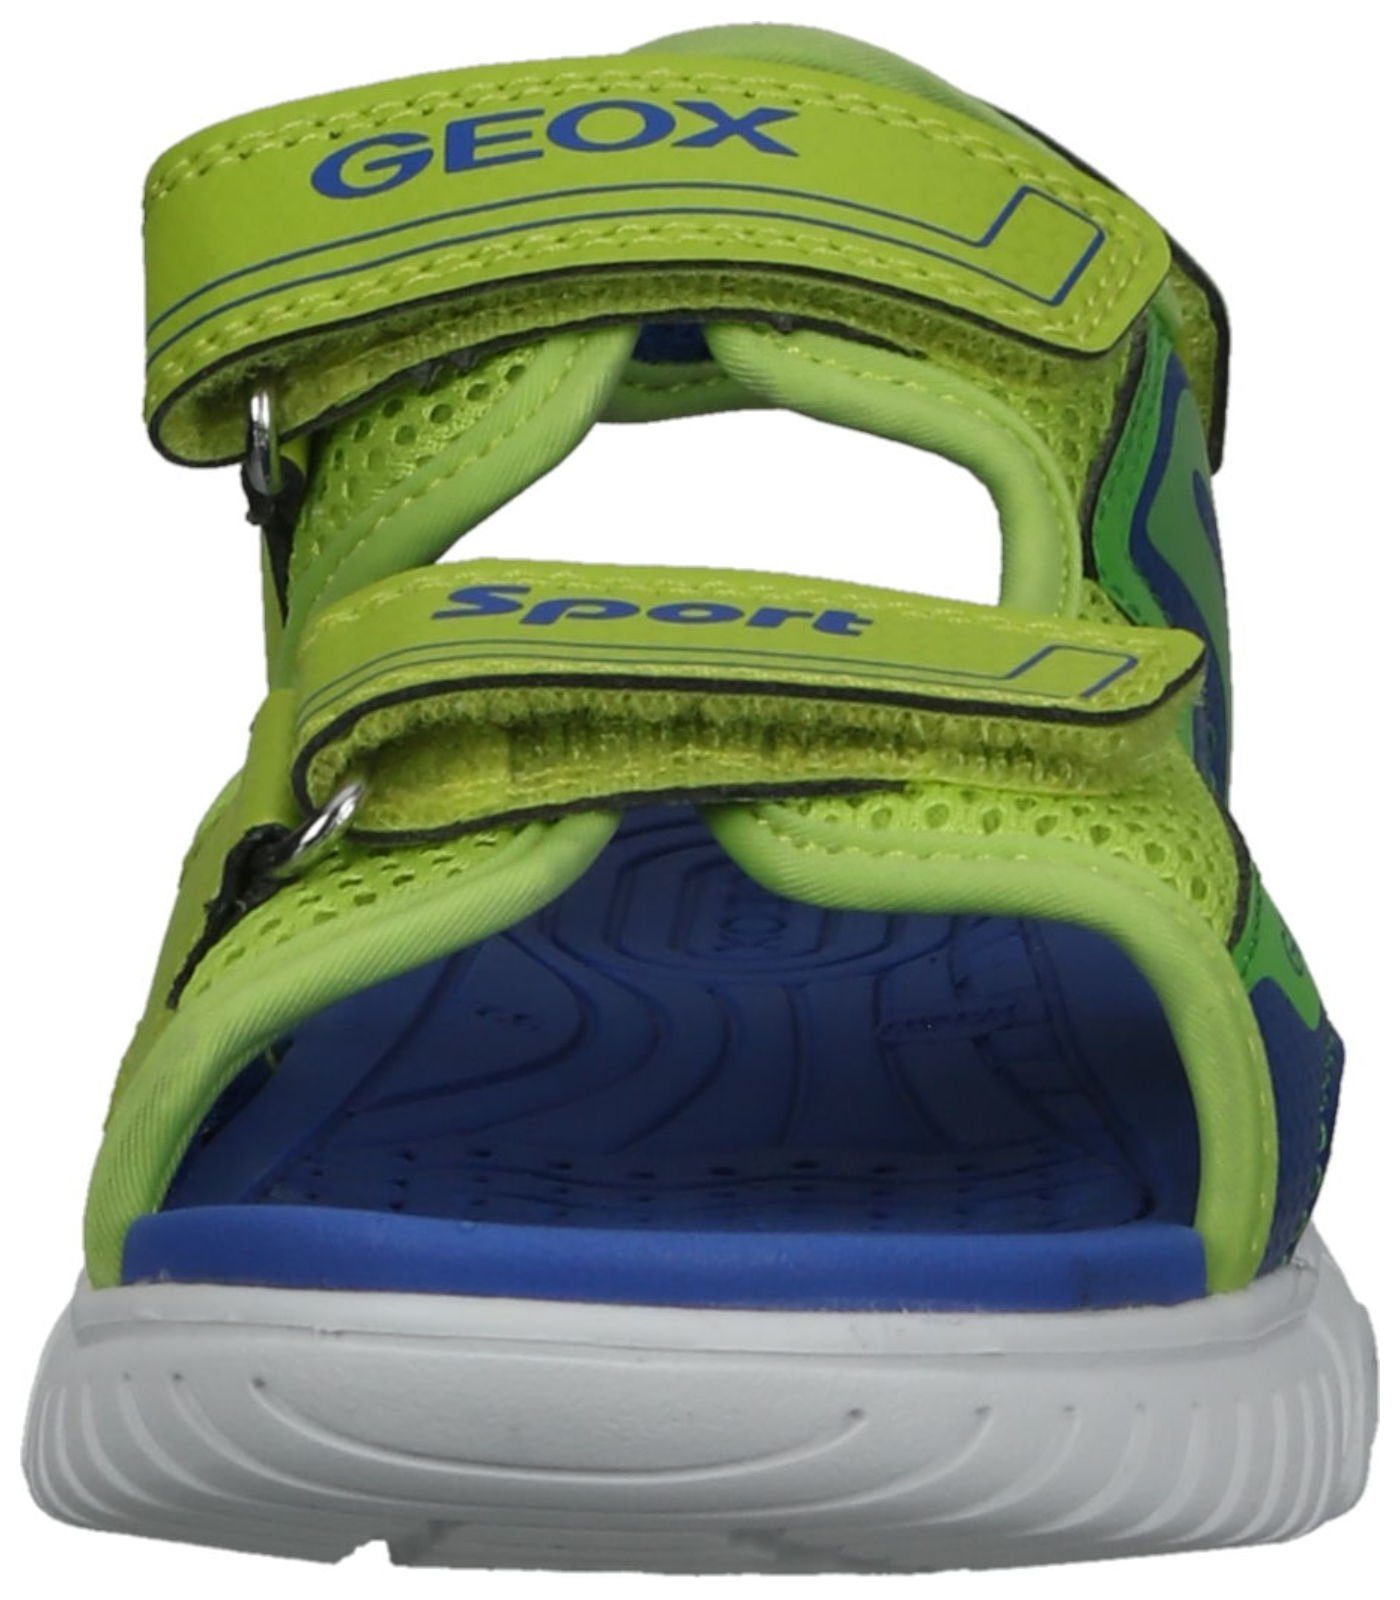 Geox Sandalen (LIME/ROYAL) Trekkingsandale Textil Grün